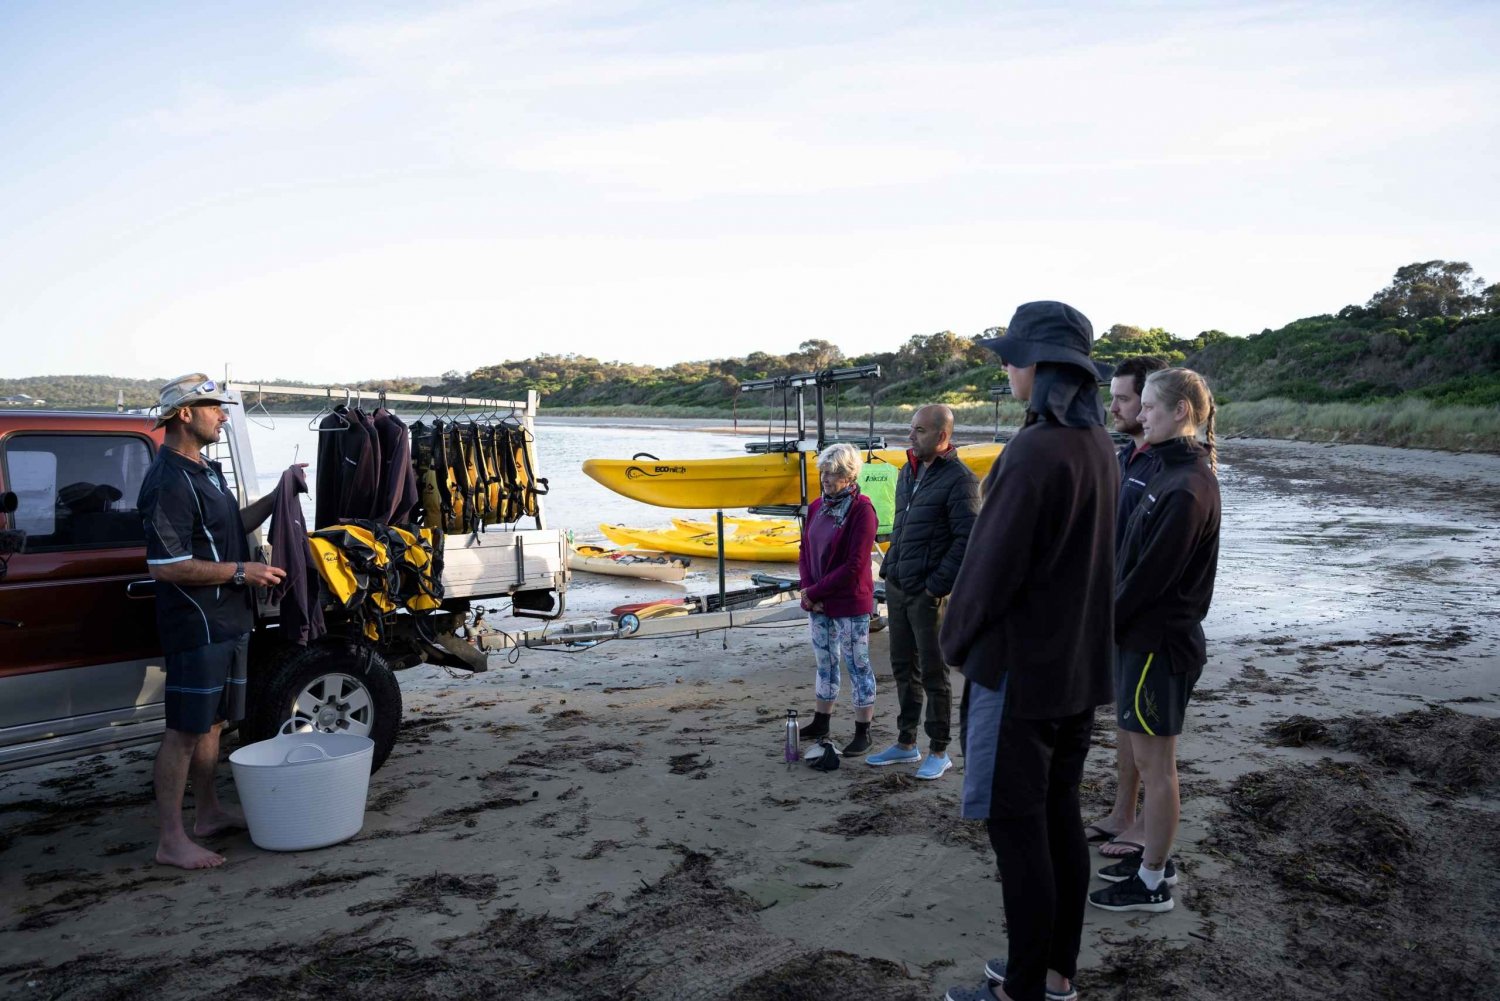 The Freycinet Paddle Kayak Tour